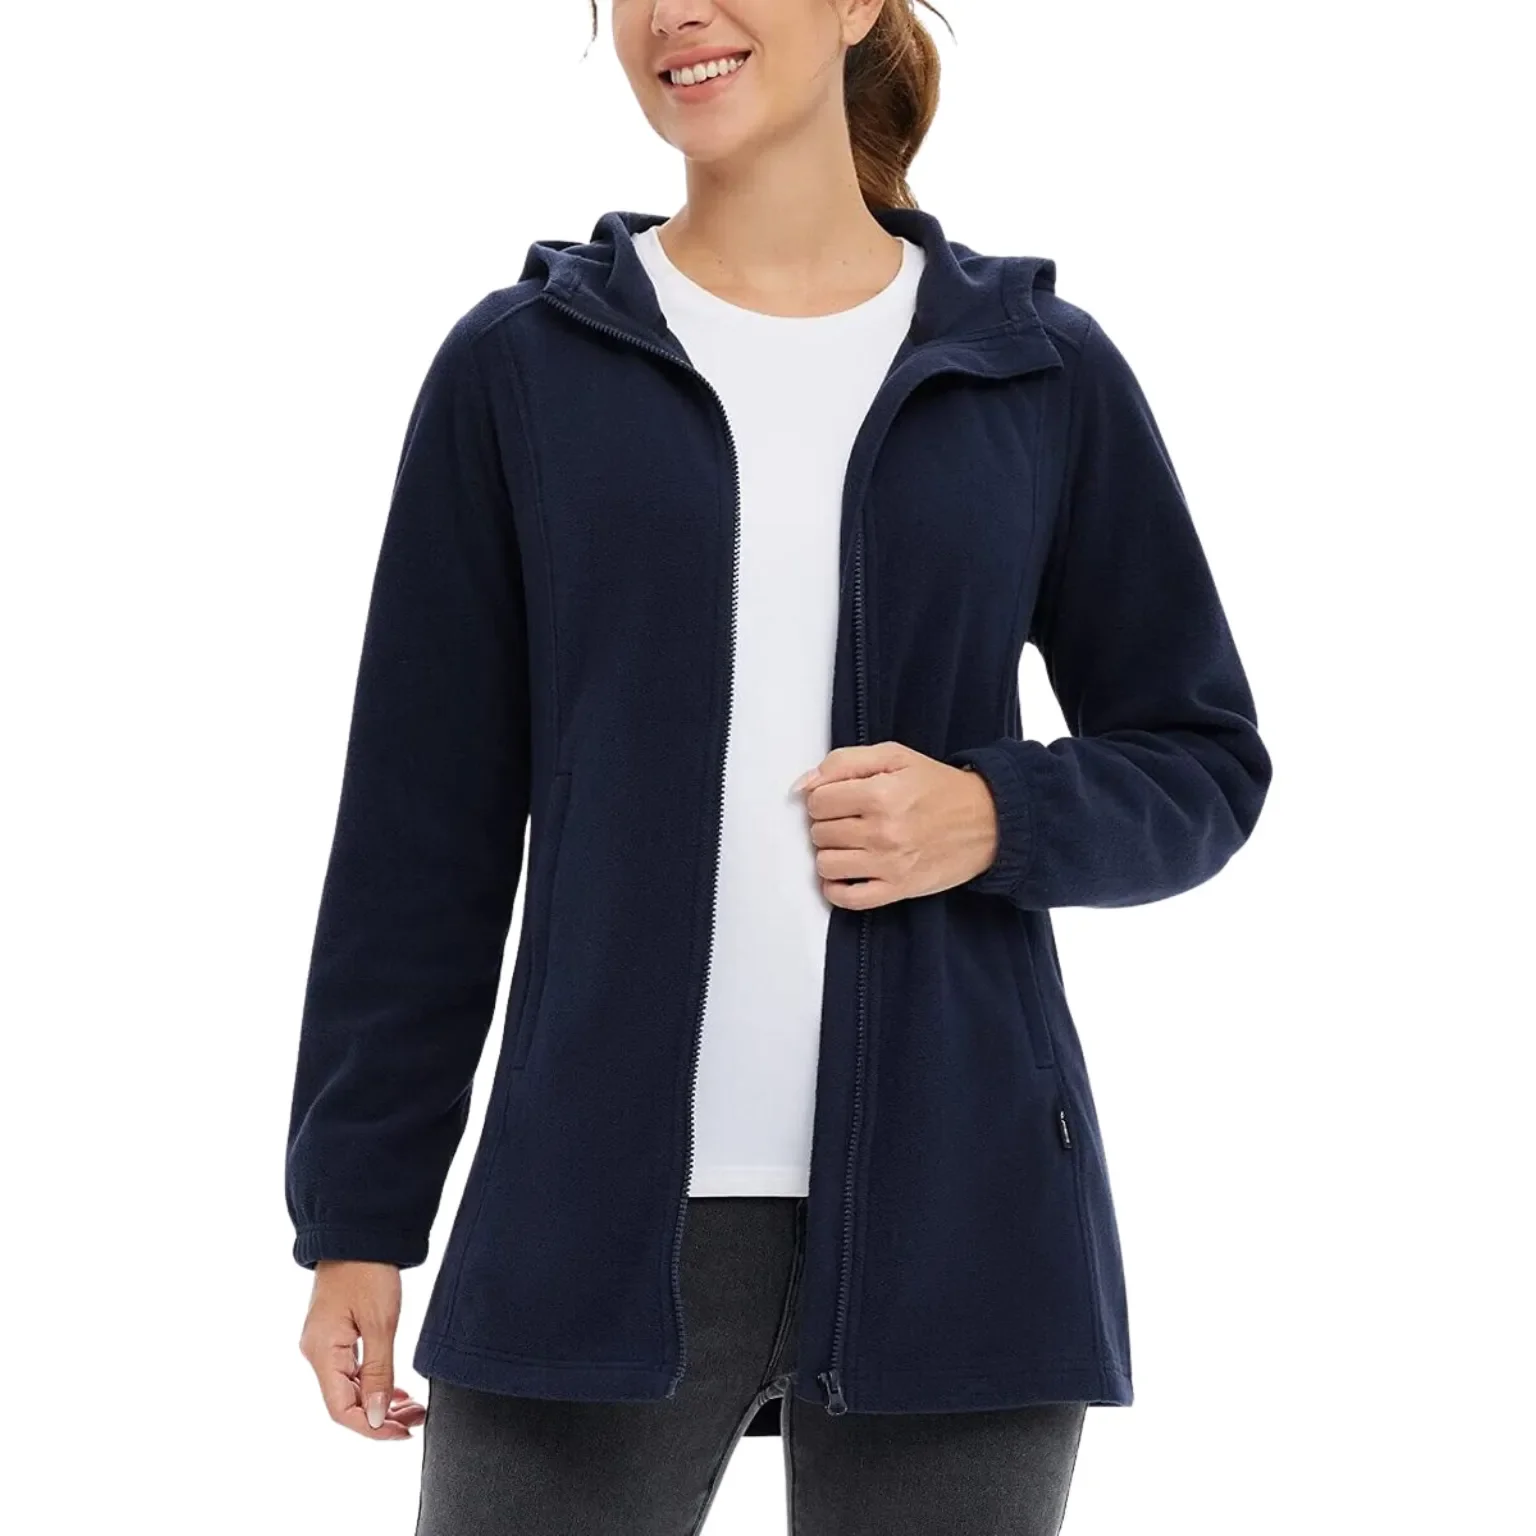 Fleece Jacket manufacturing with trendy design